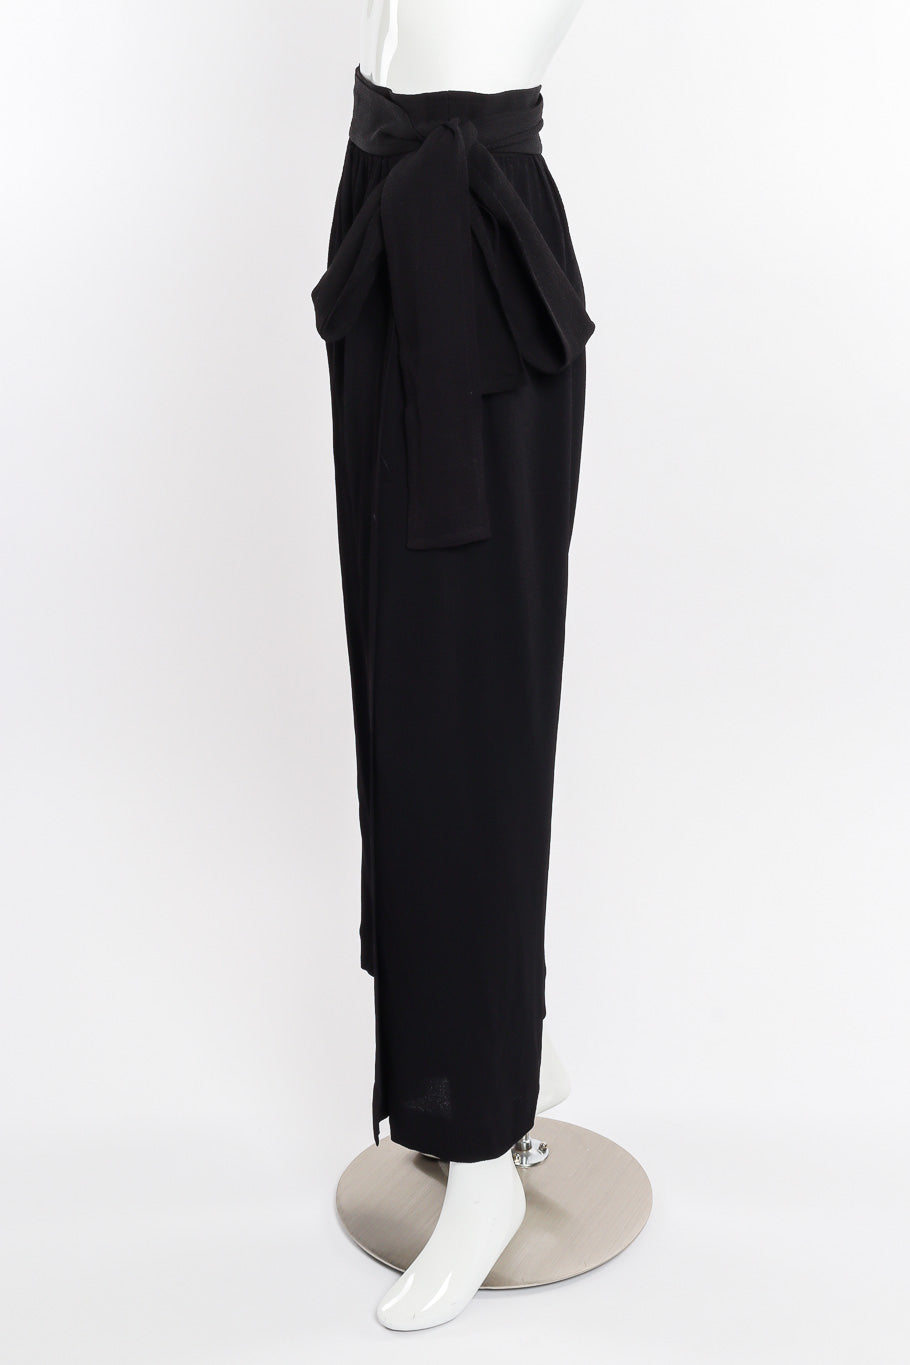 Wrap trouser by Yves Saint Laurent on mannequin side @recessla